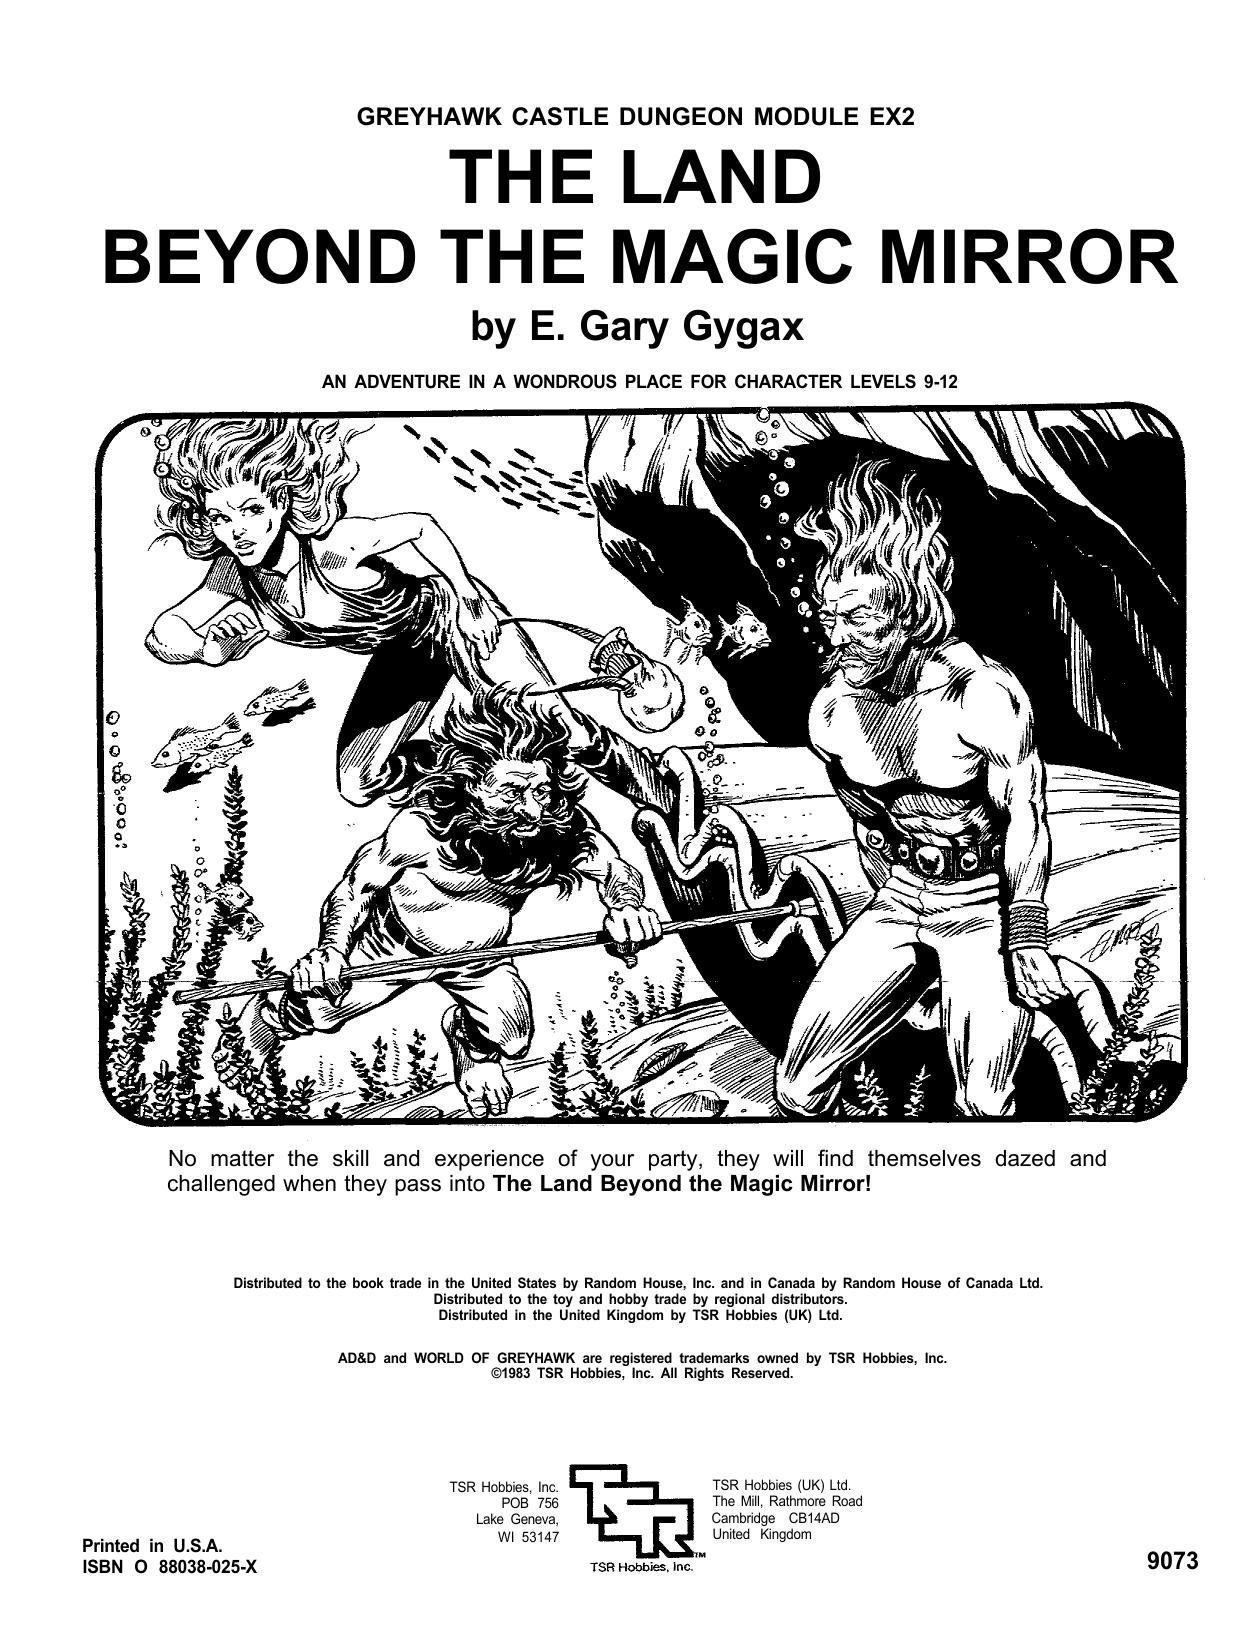 The Land Beyond the Magic Mirror